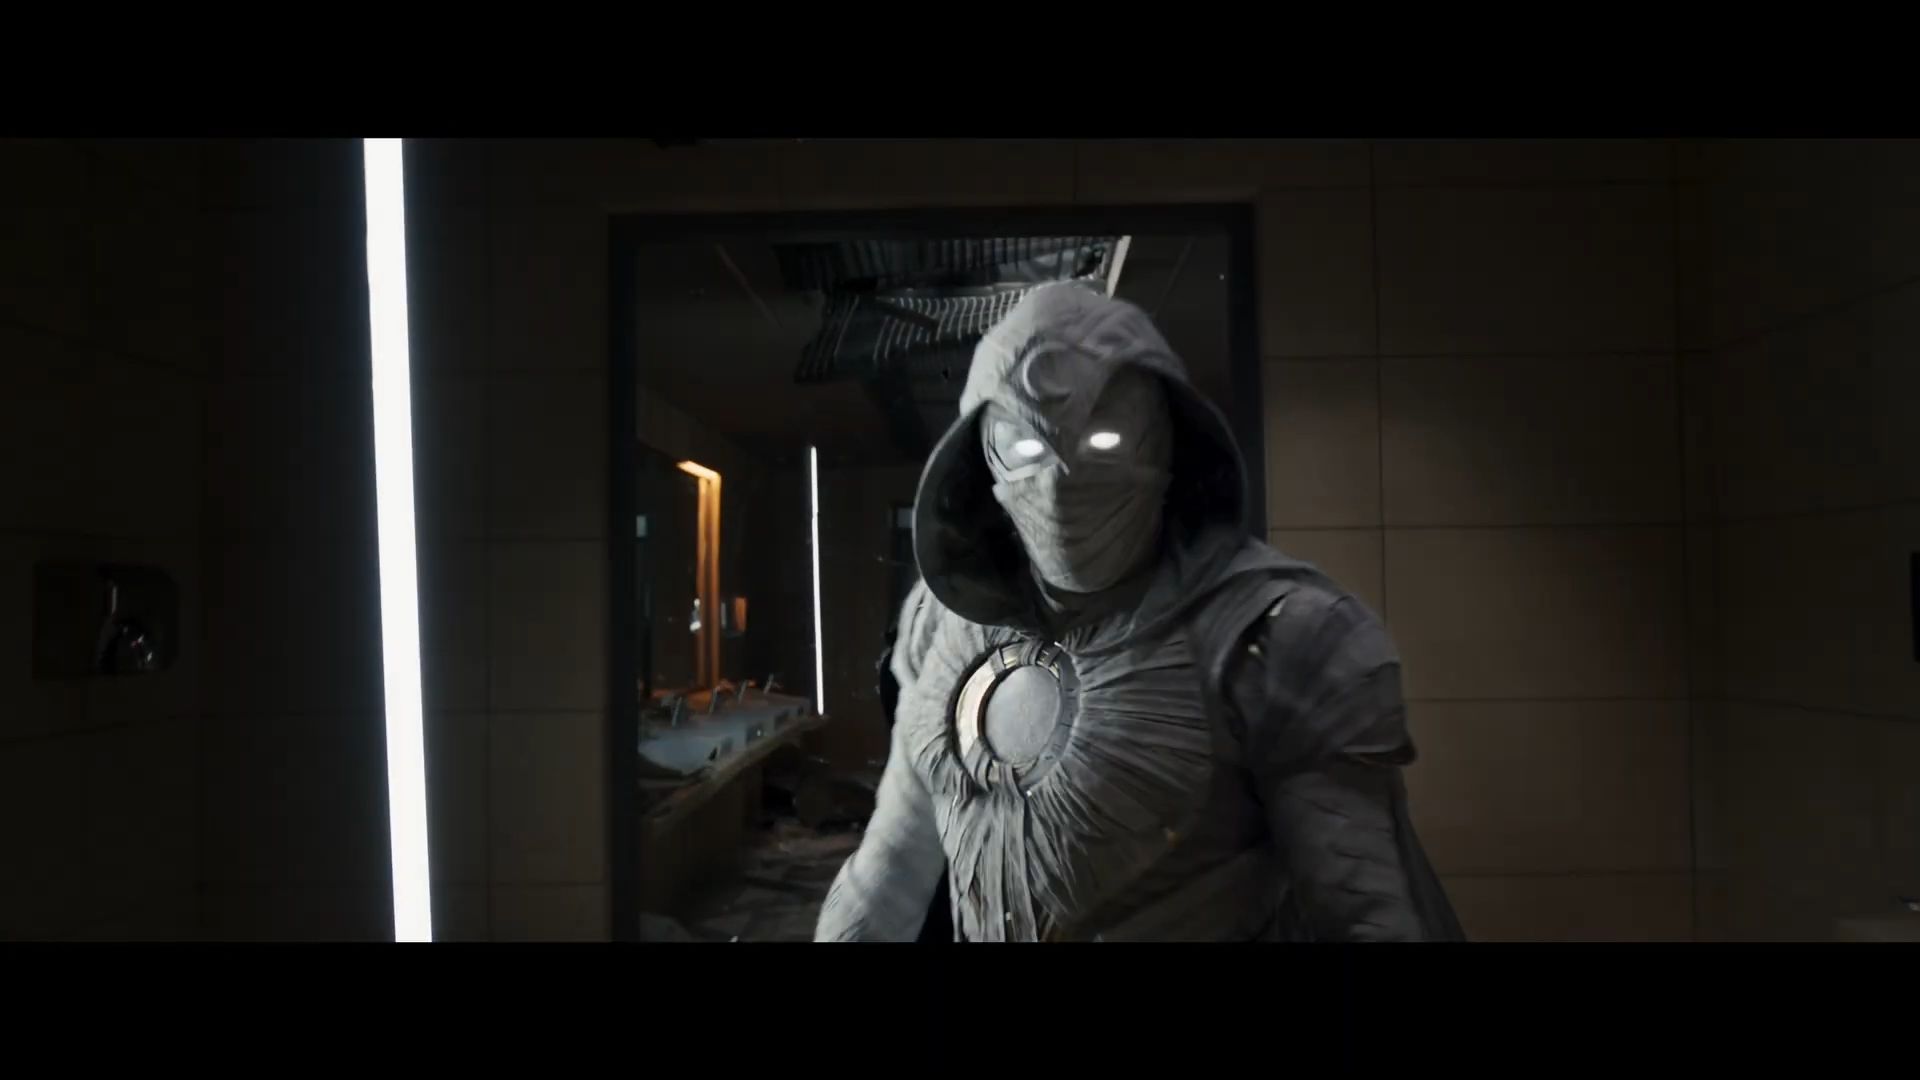 Moon Knight Trailer Second-Highest for Marvel TV Series